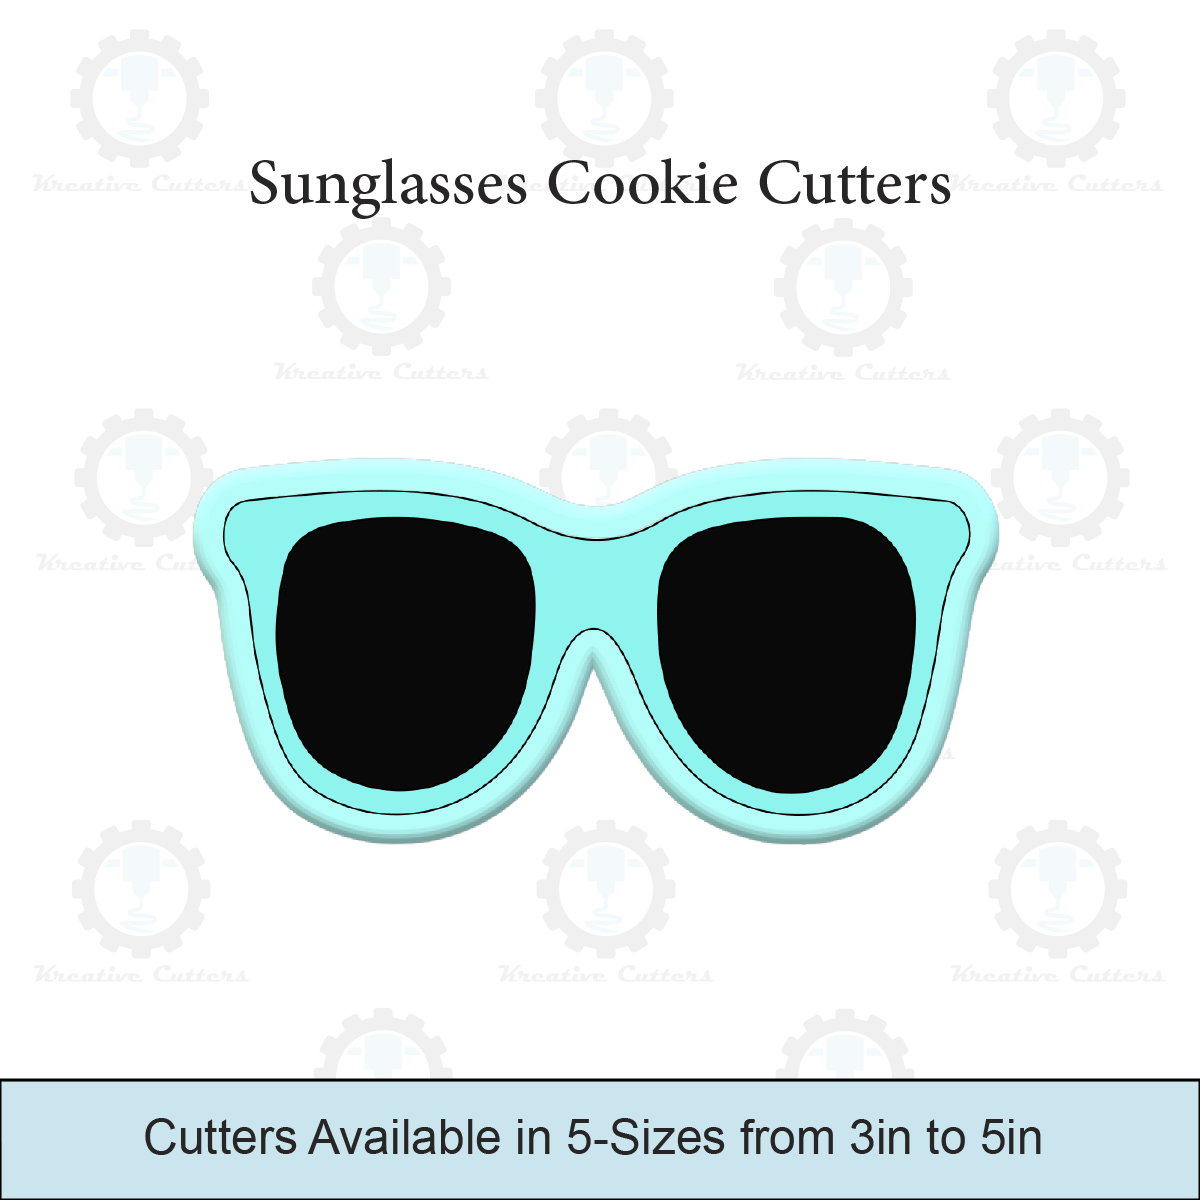 Sunglasses Cookie Cutters